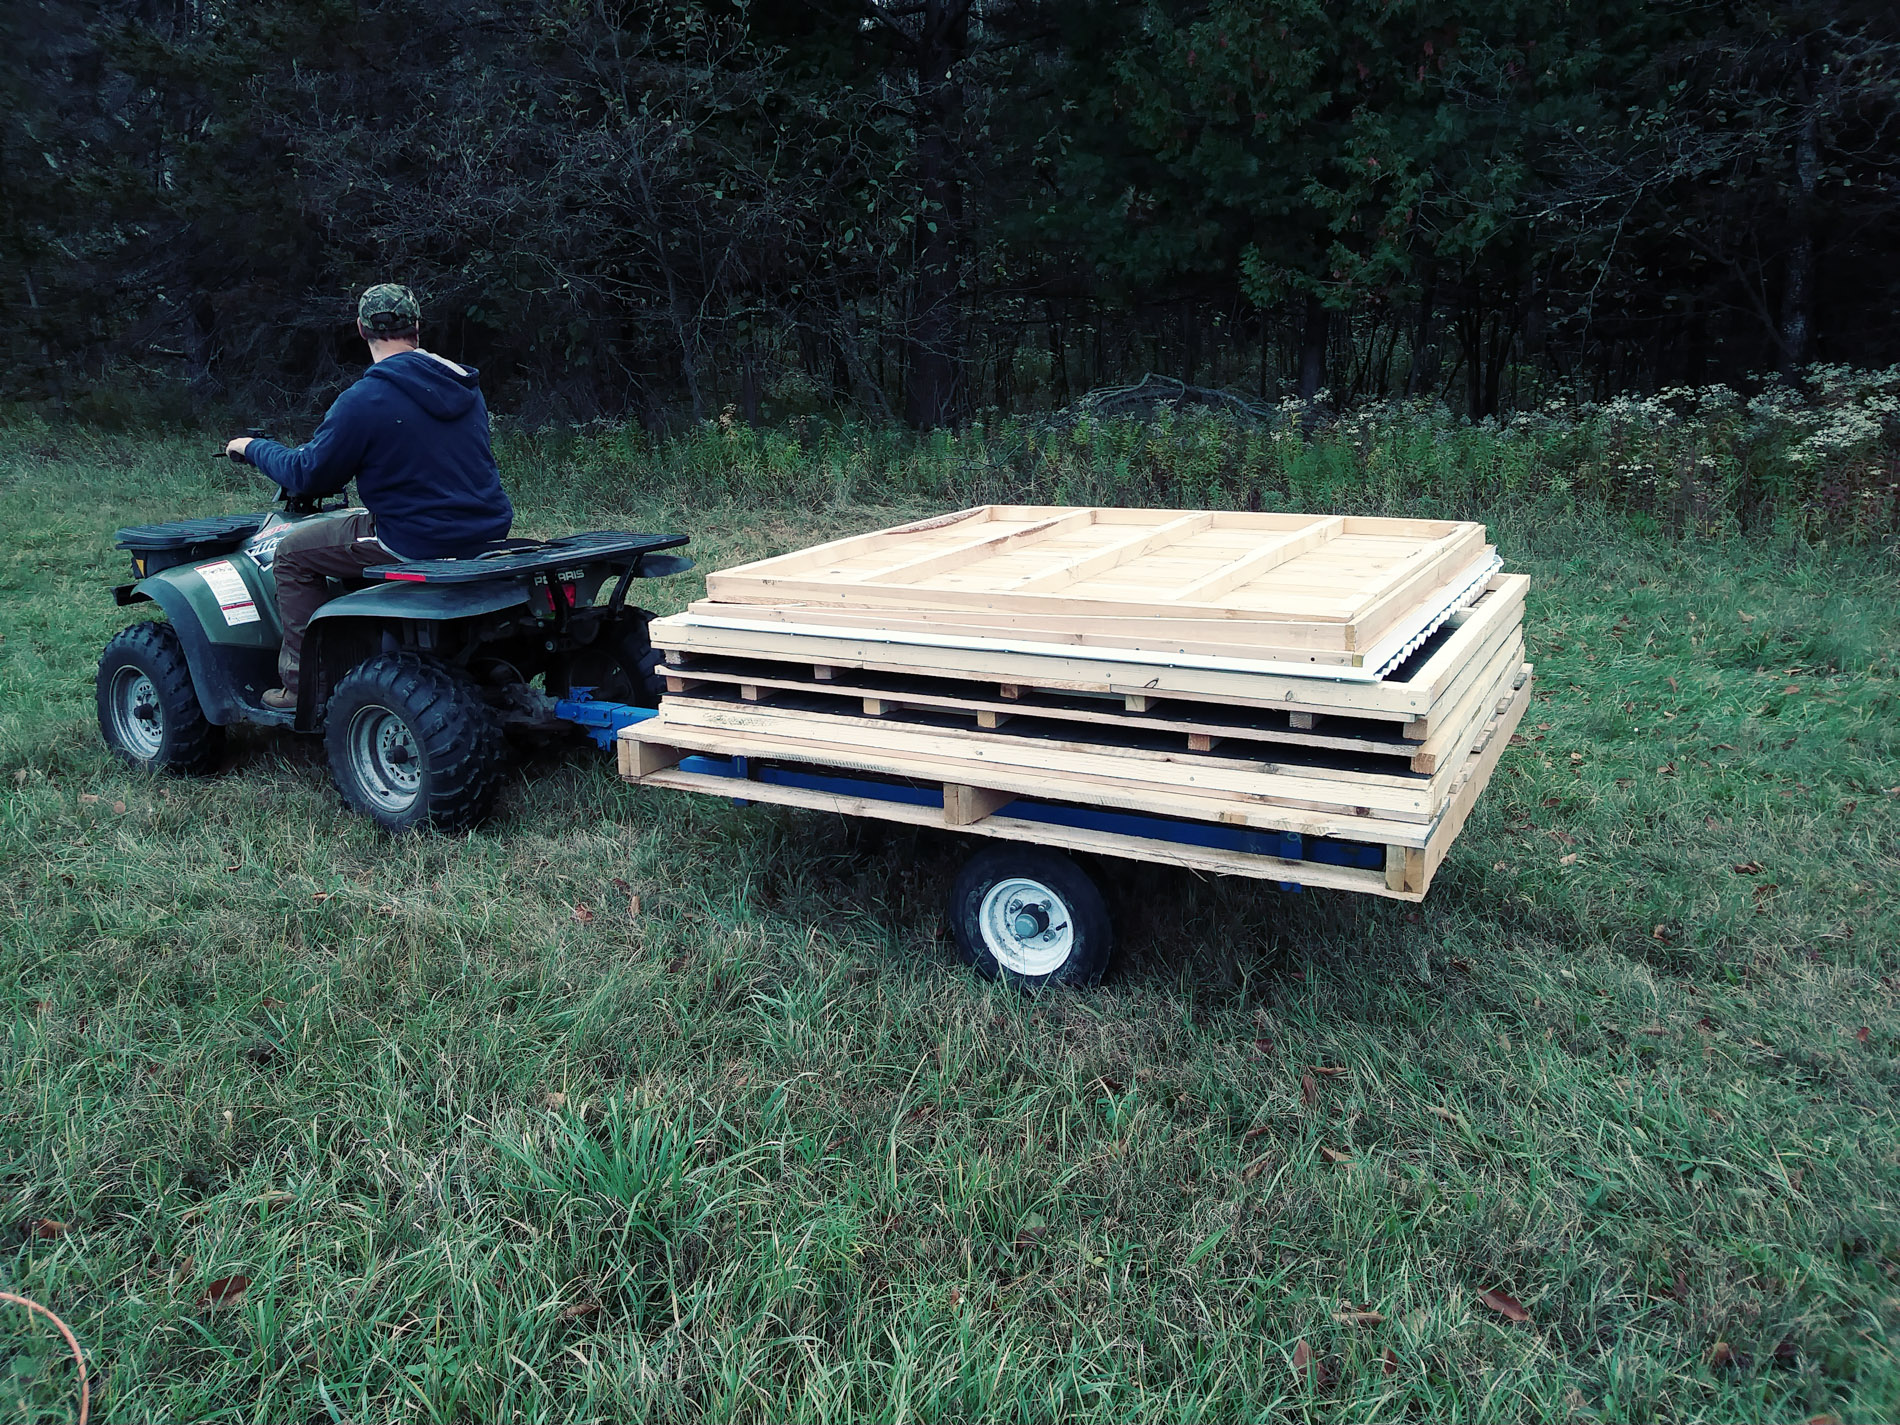 Four-wheeler hauling wood for deer blind construction